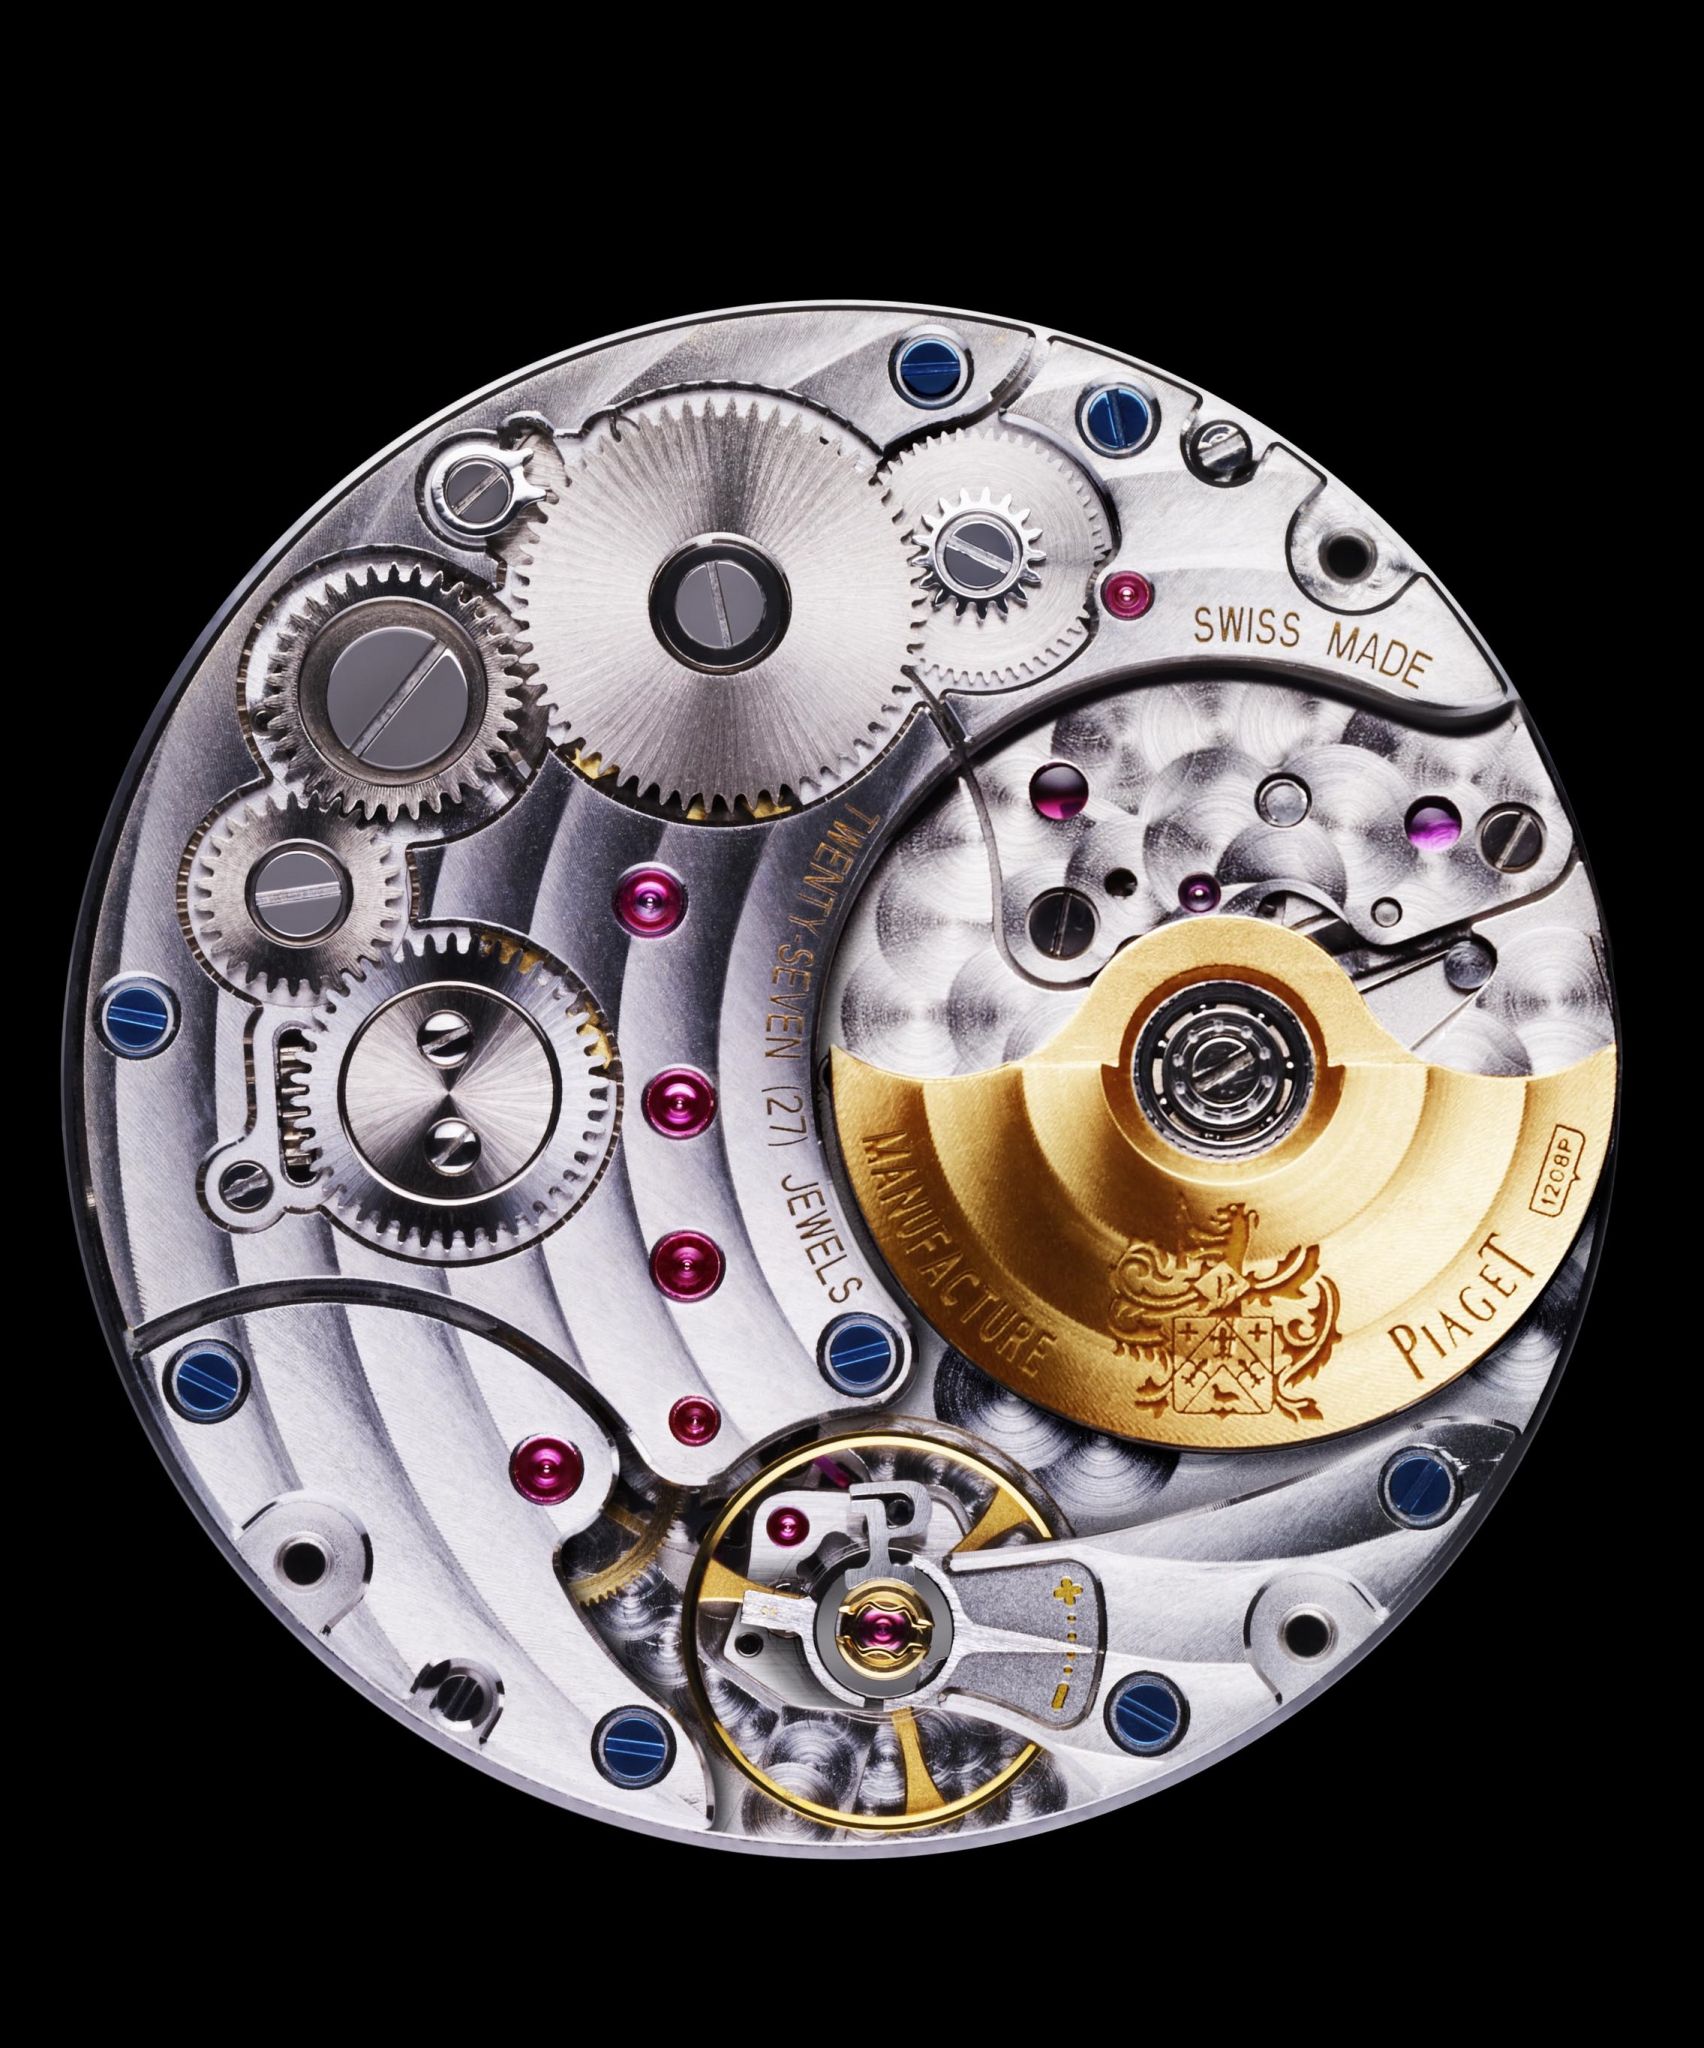 Piaget-watch-movement-ultra-thin | Geneva Watch Repair